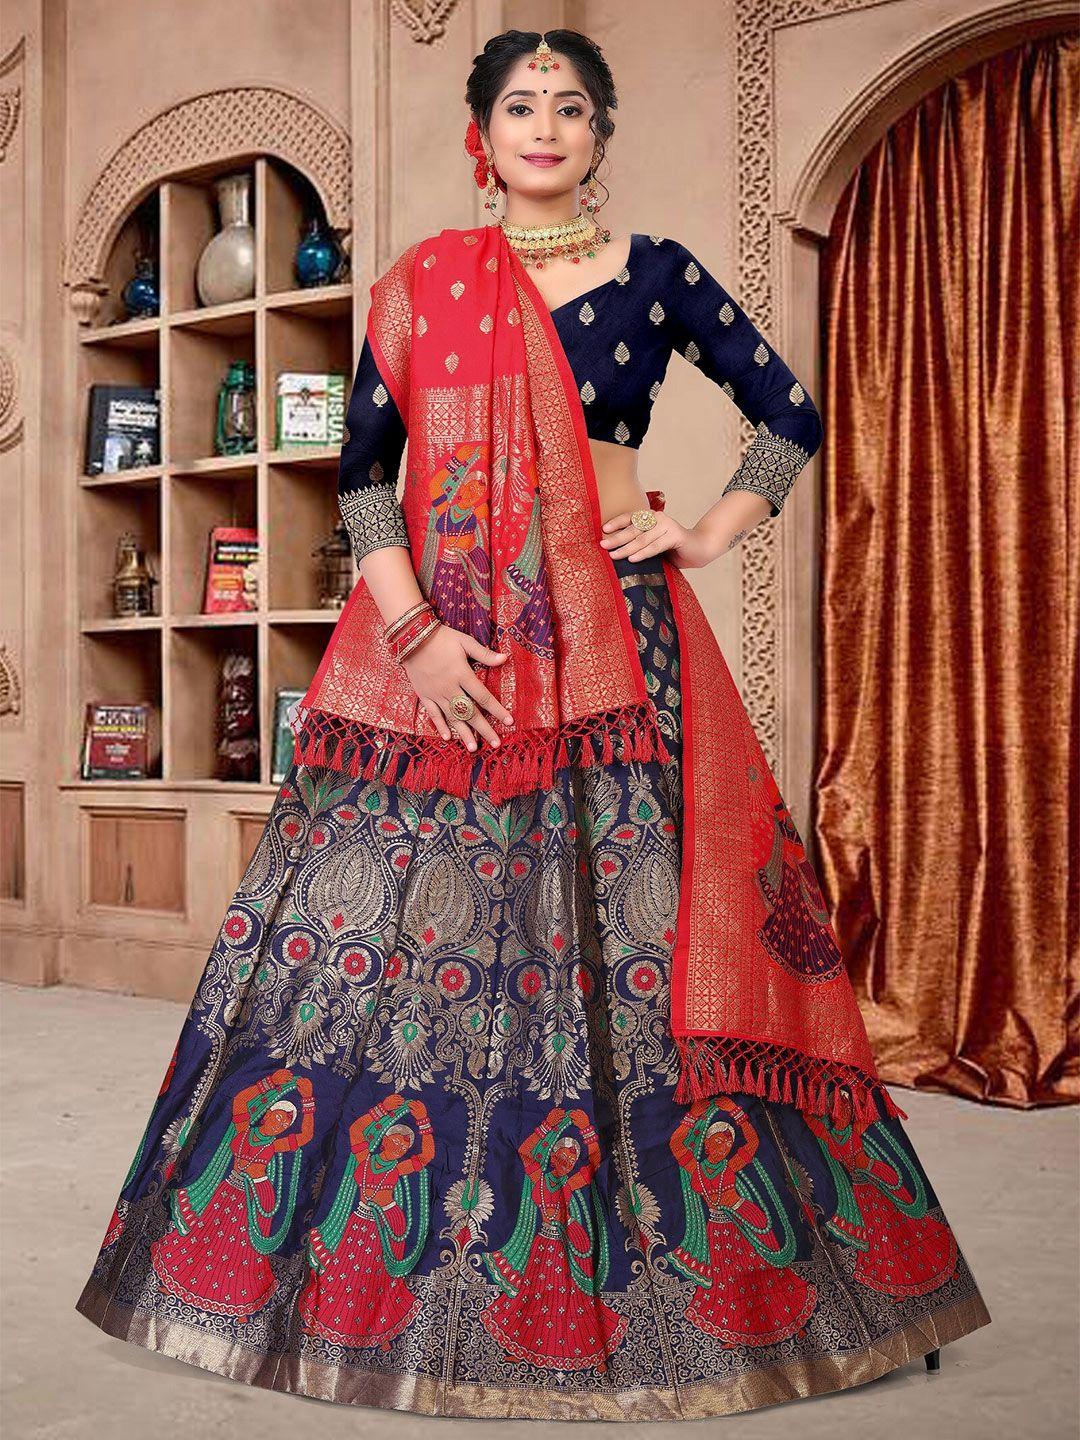 kalini woven design semi-stitched lehenga & unstitched blouse with dupatta